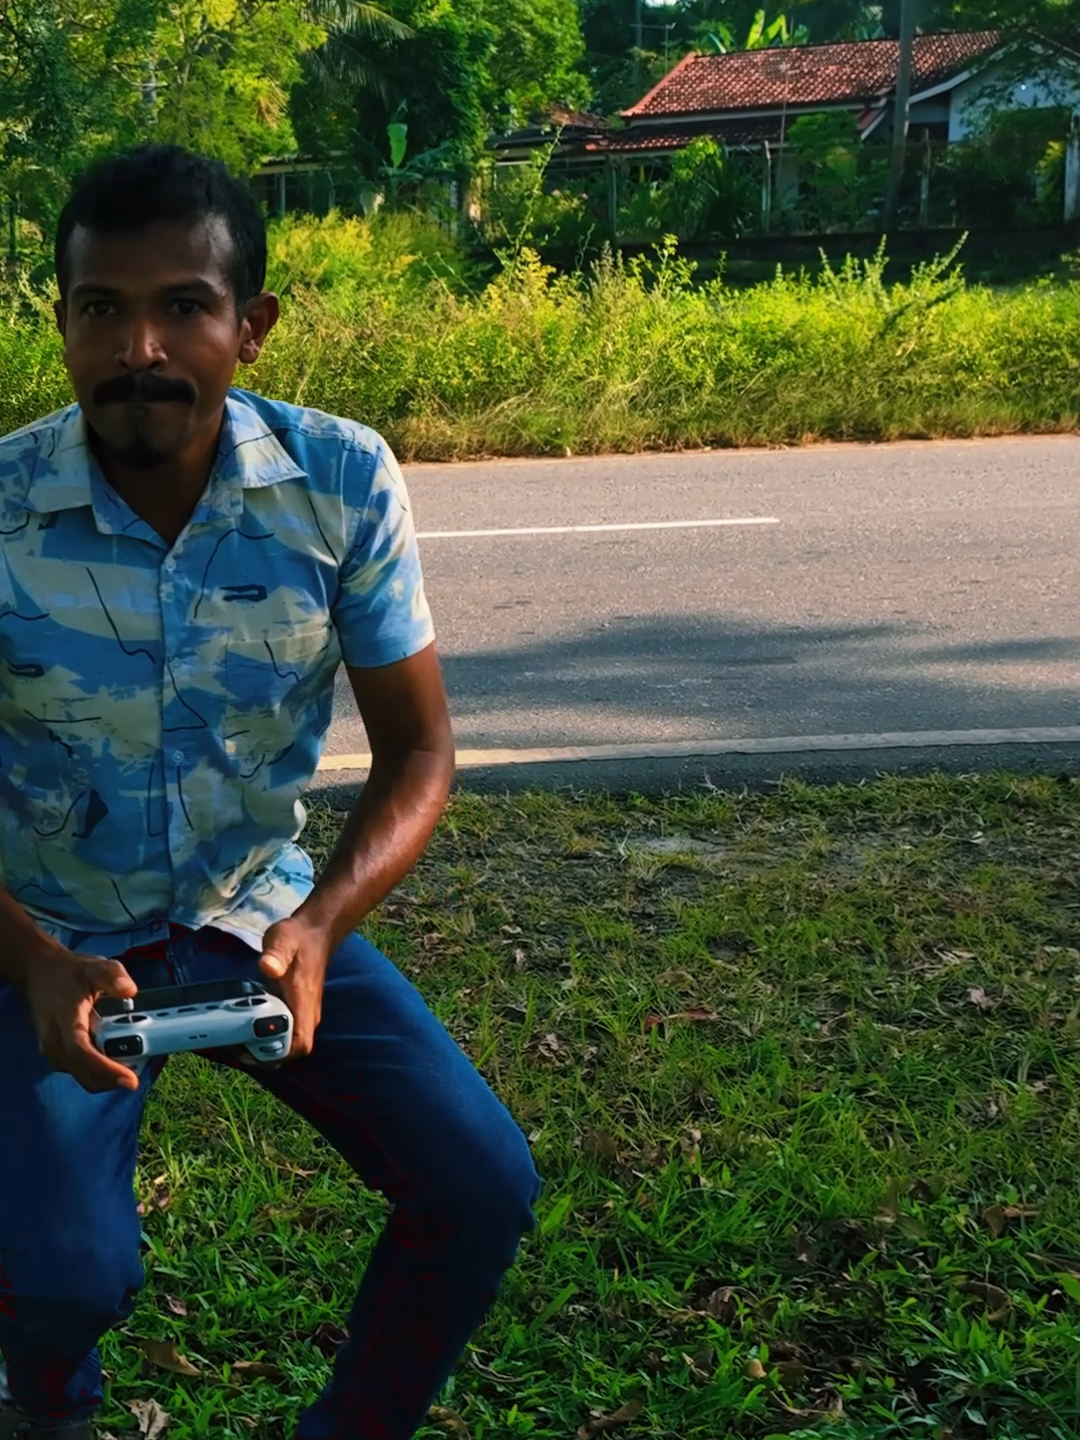 This is Sri Lanka - drone - Ground level